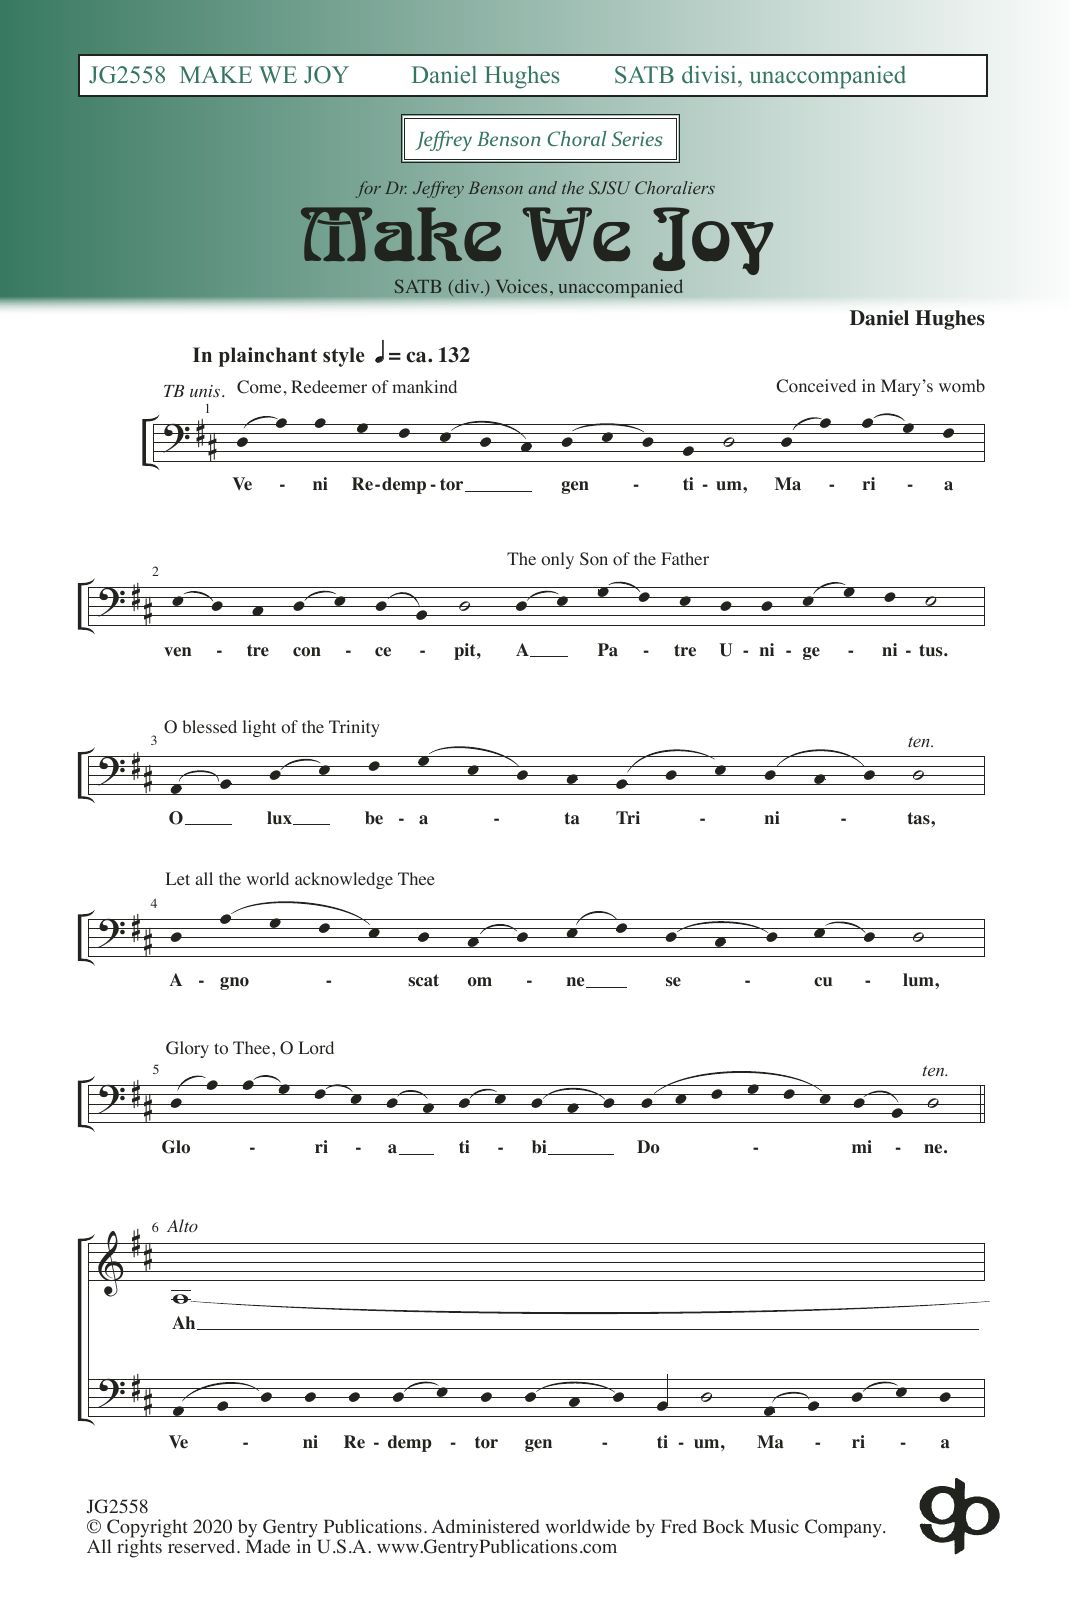 Daniel Hughes Make We Joy Sheet Music Notes & Chords for SATB Choir - Download or Print PDF